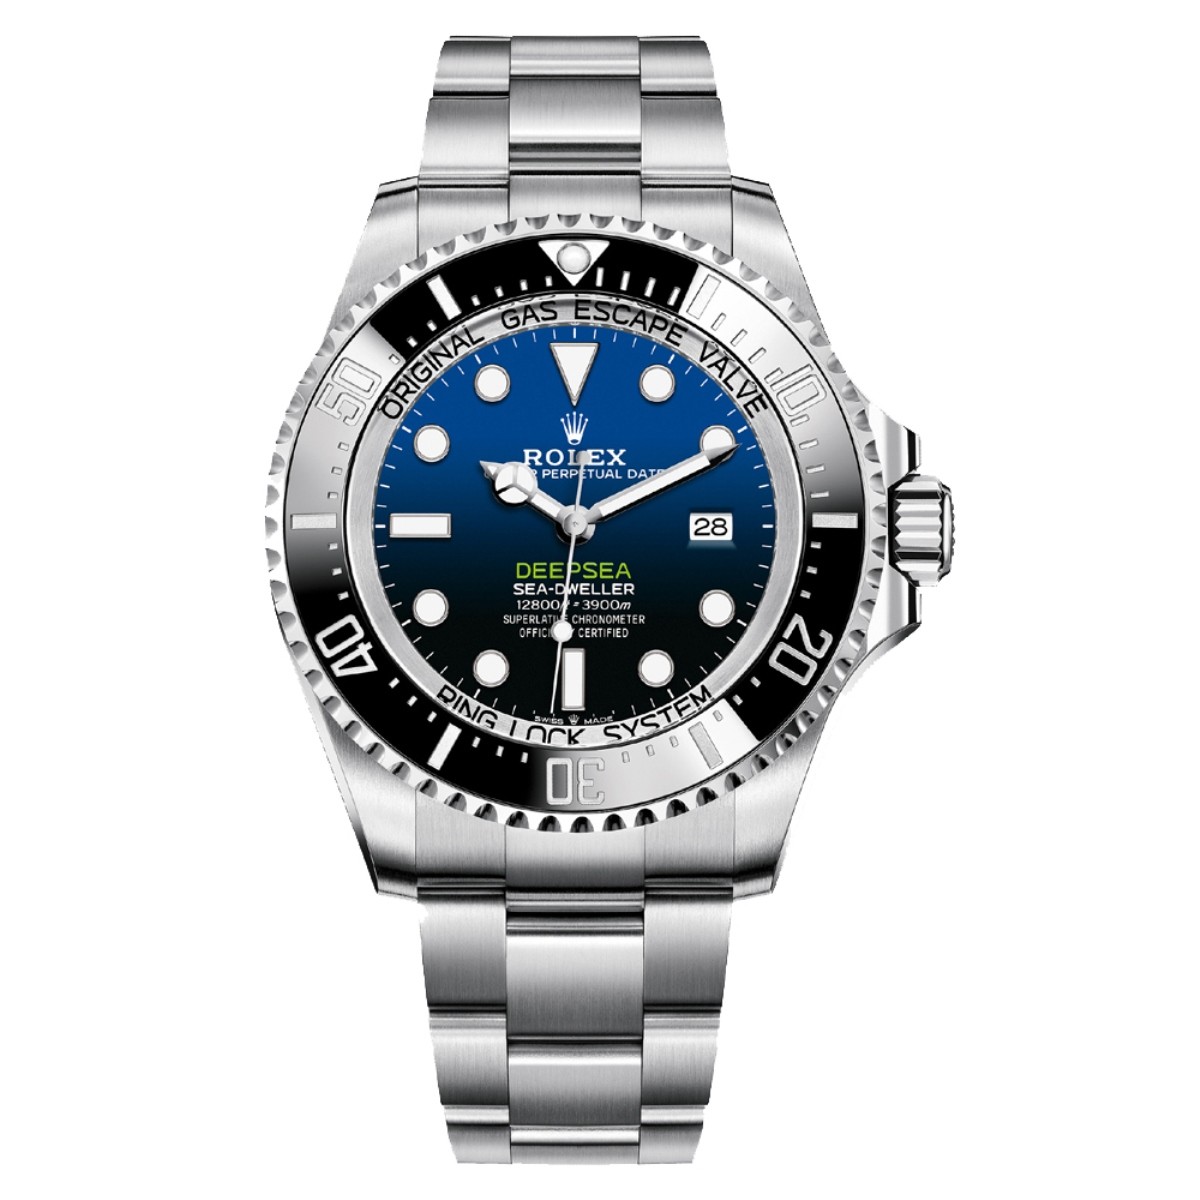 New Rolex Sea-Dweller Deepsea